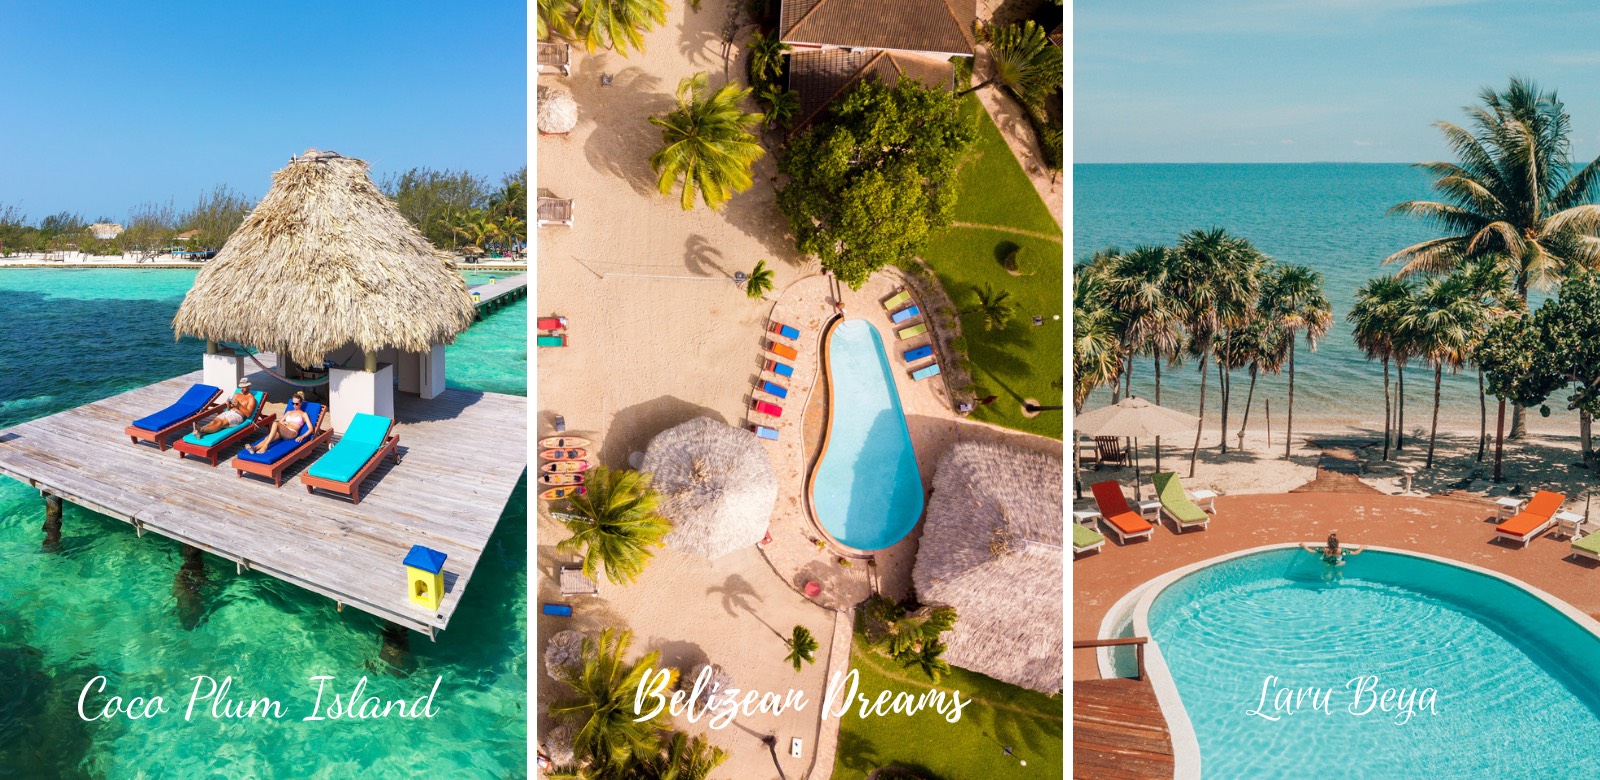 Belize Resorts - Drone shots